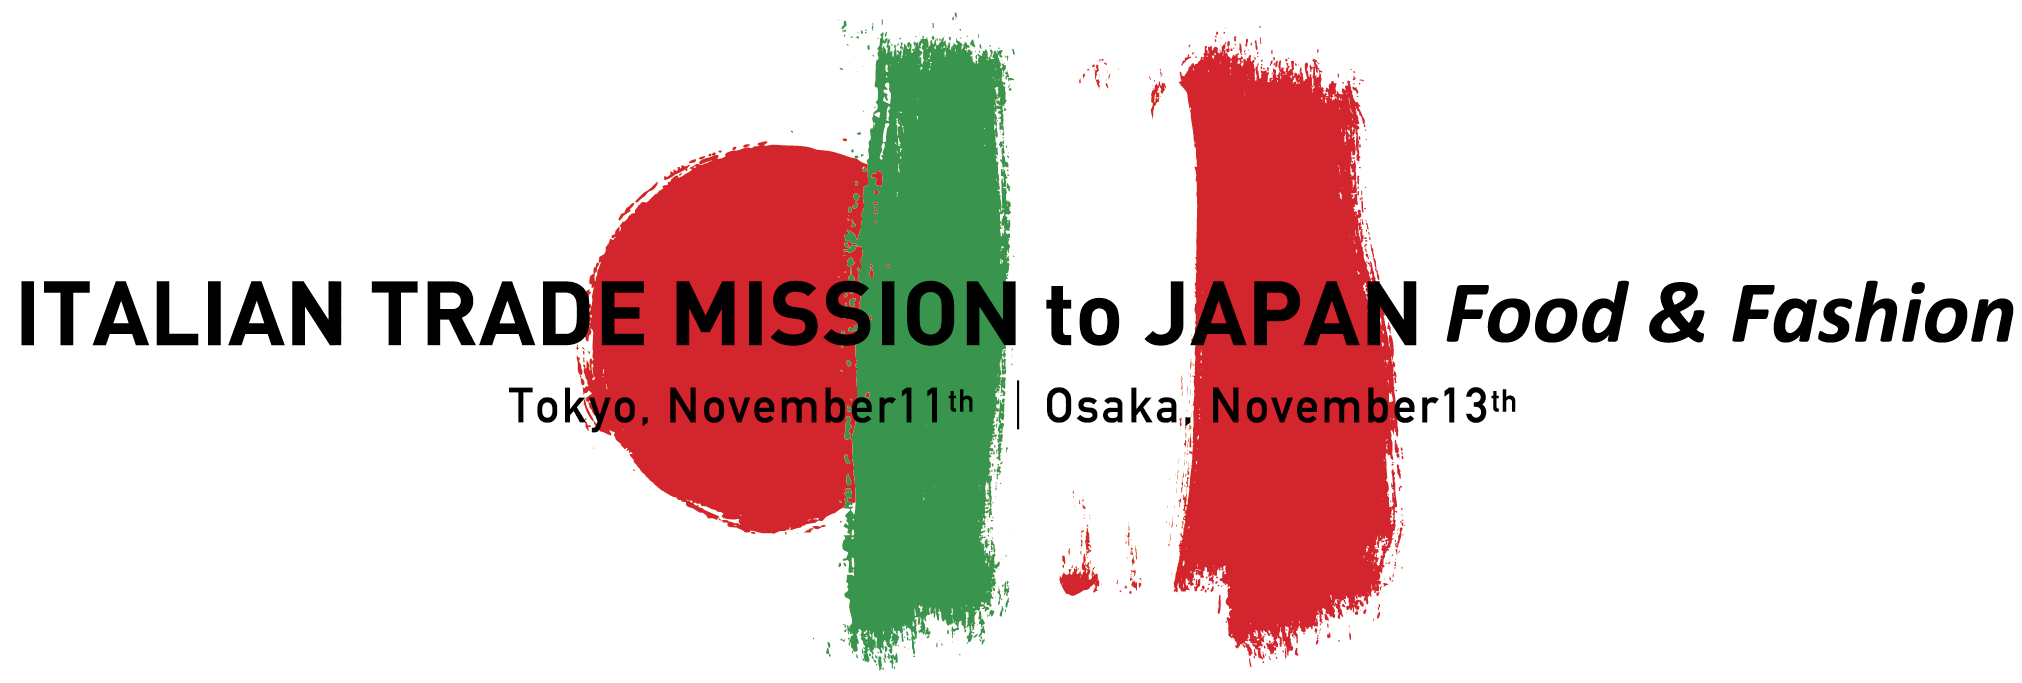 ITALIAN TRADE MISSION to JAPAN Food & Fashion